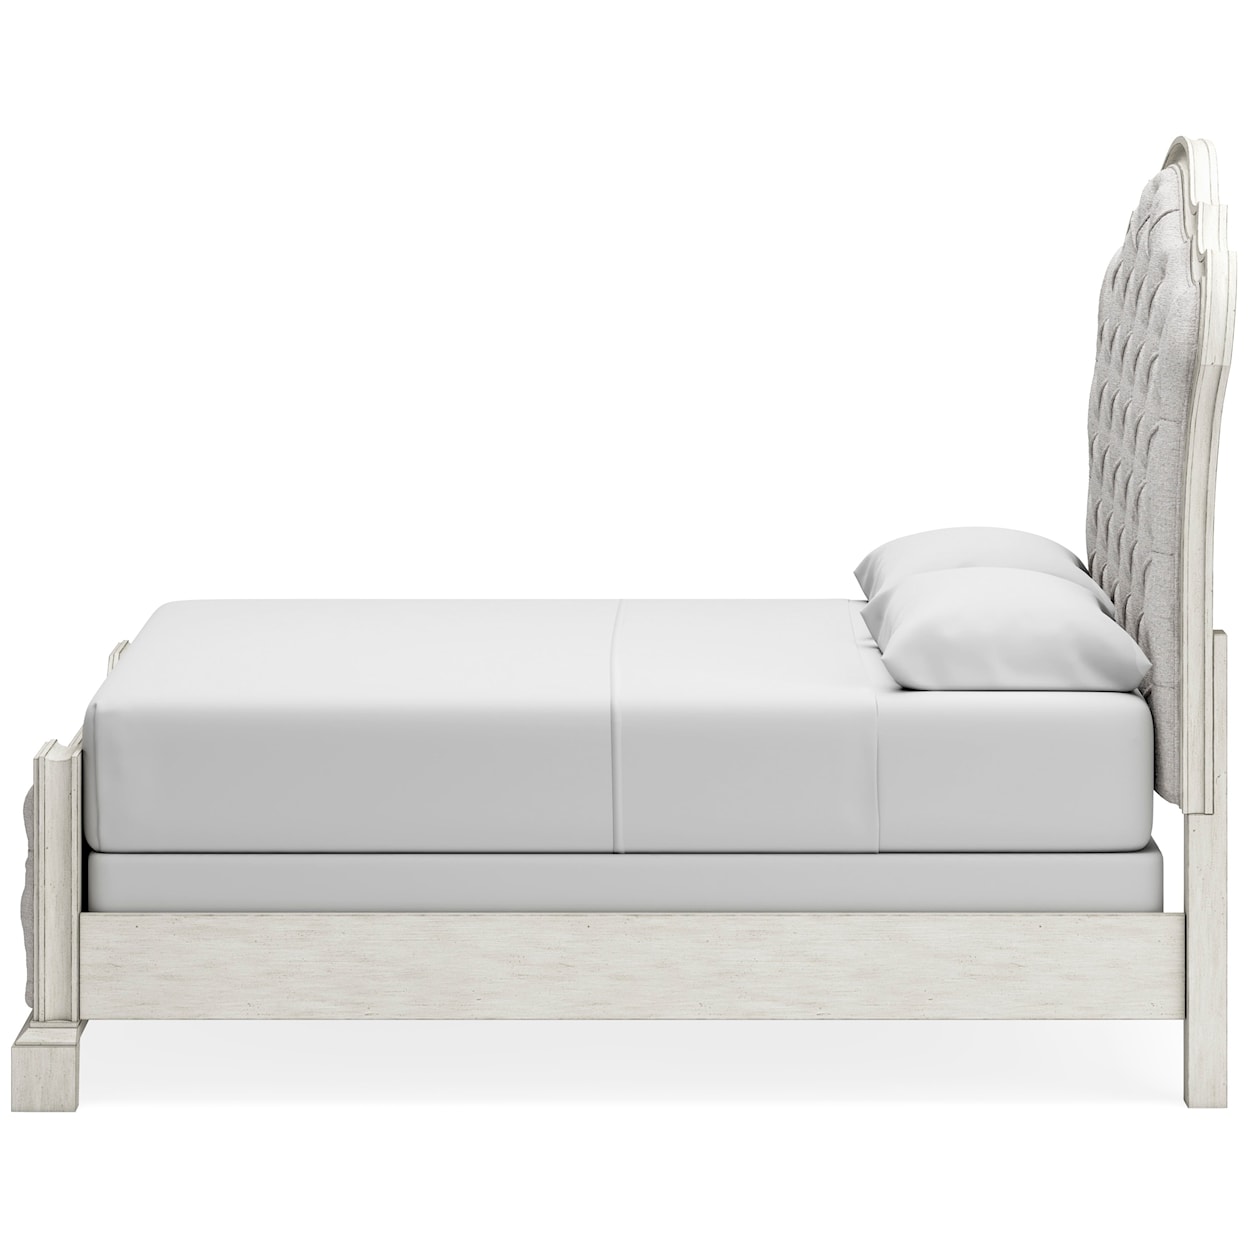 Ashley Furniture Signature Design Arlendyne Queen Bed